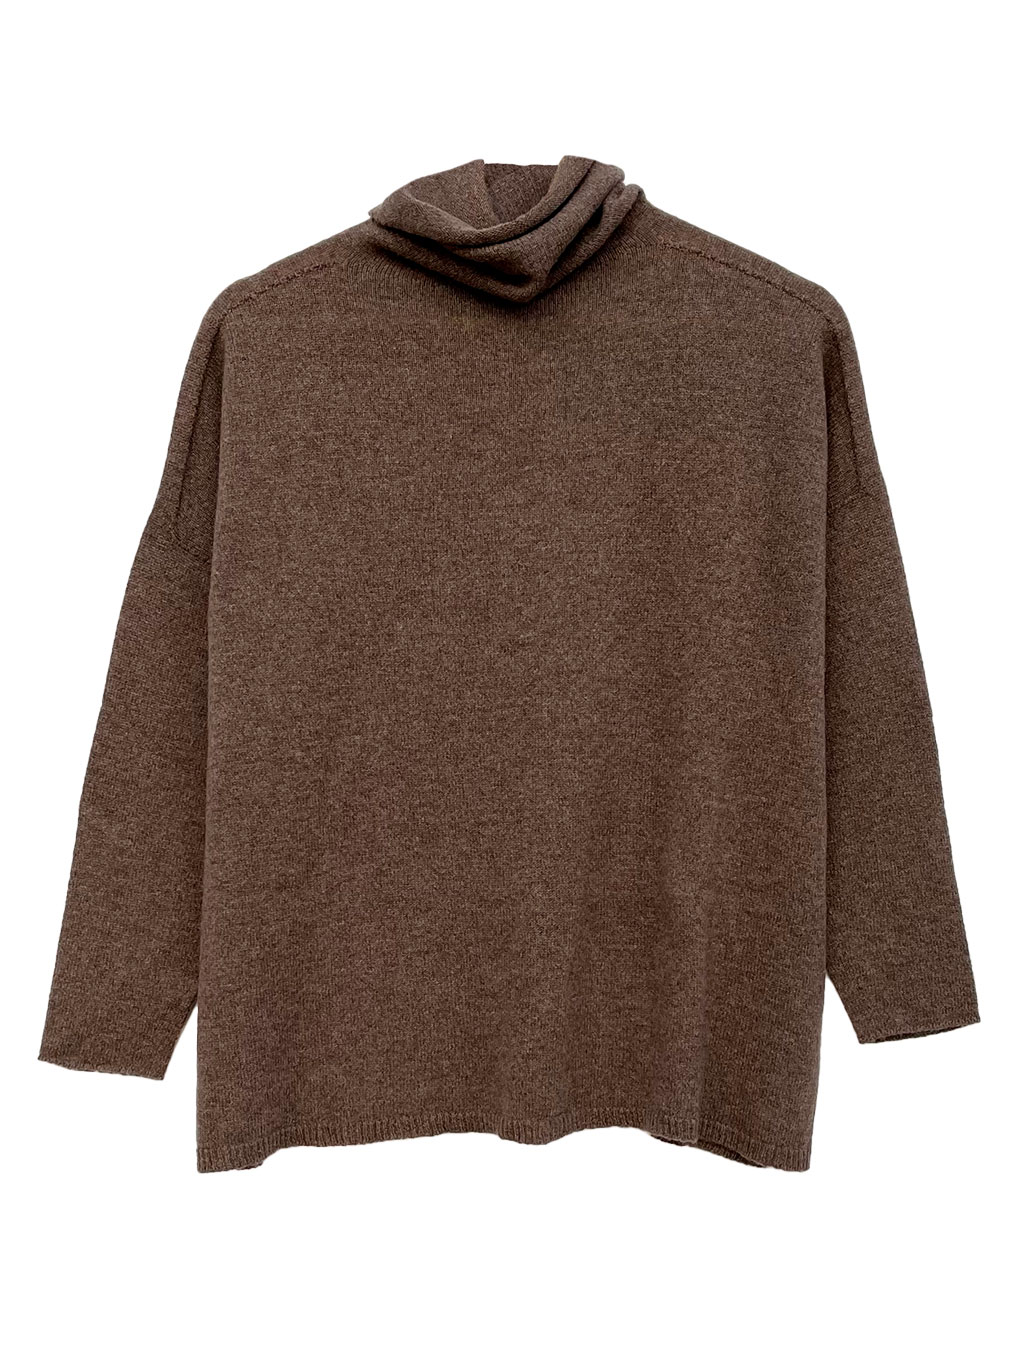 brown-cashmere-turtleneck-pullover